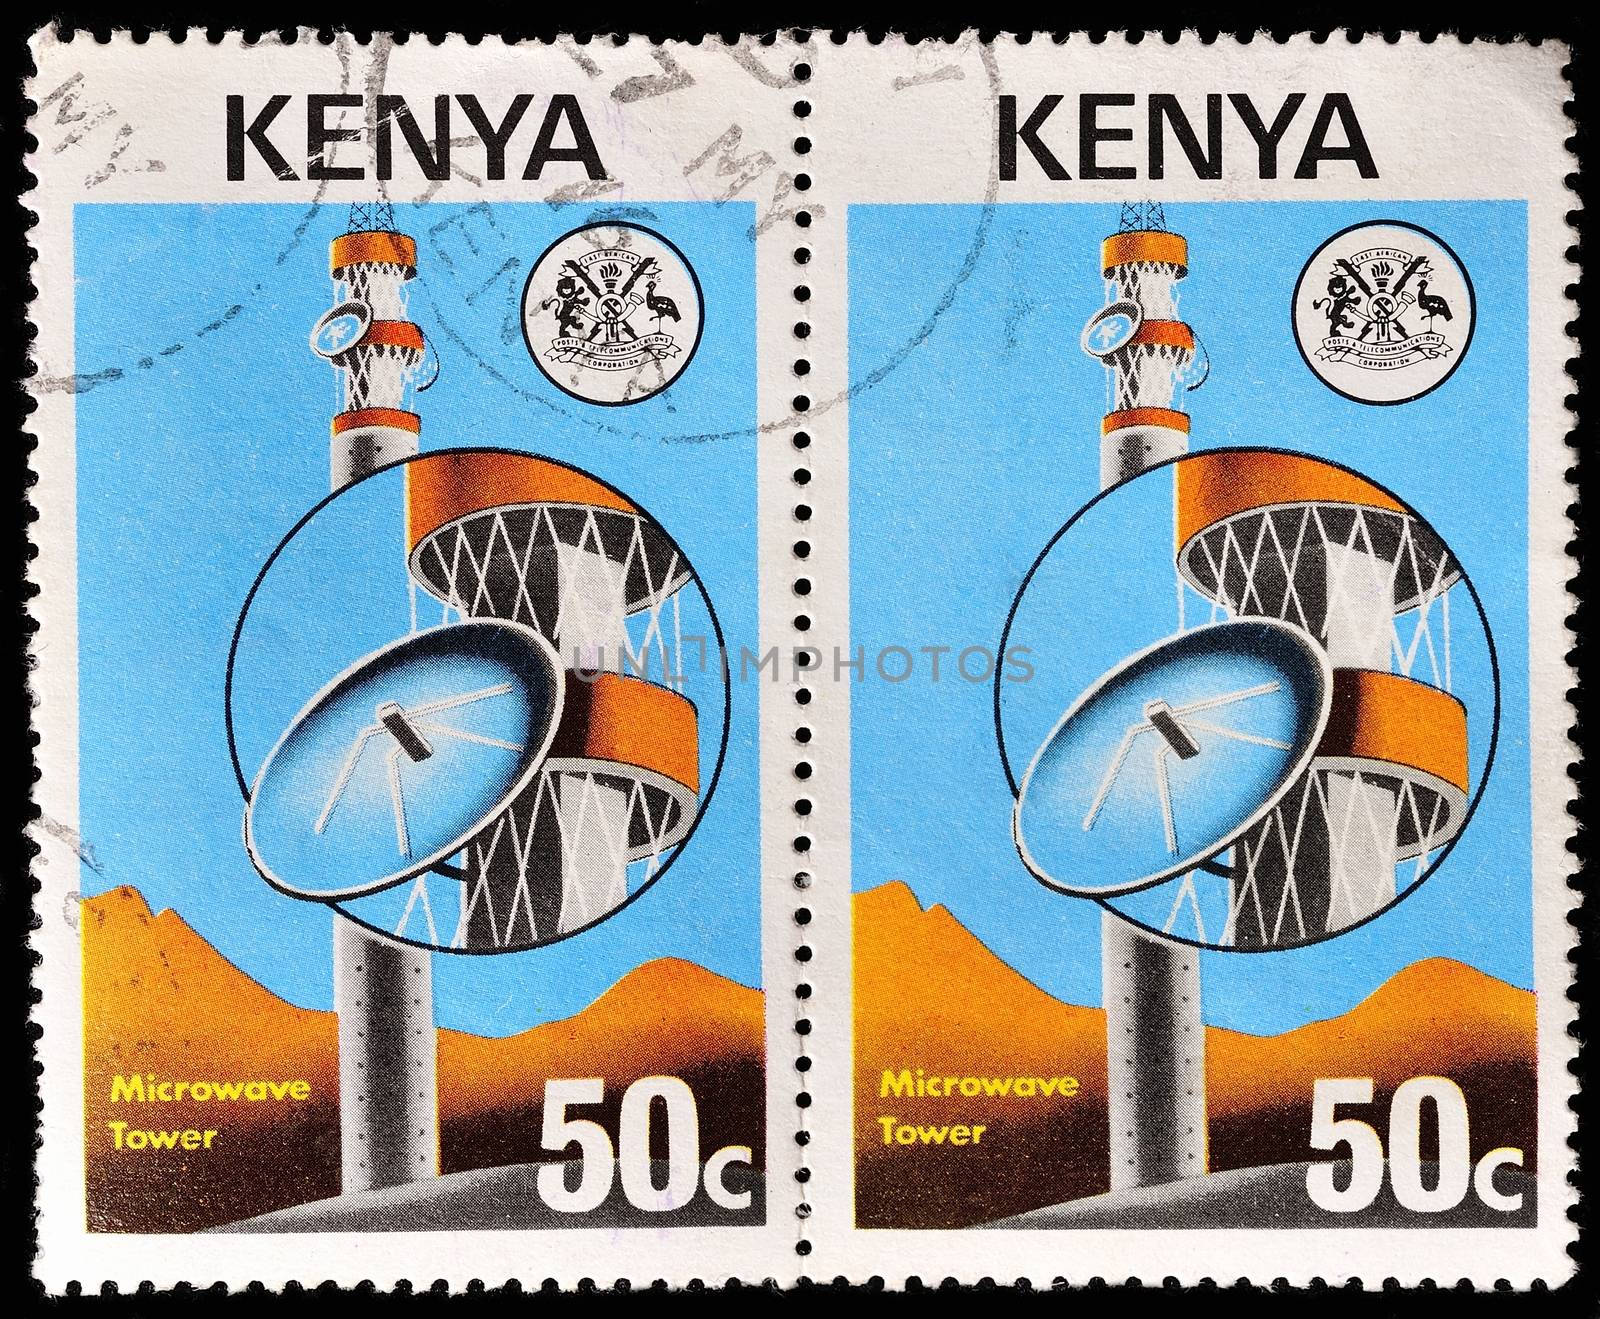 KENYA - CIRCA 1977: stamp printed in Kenya, shows Microwave tower, circa 1977.